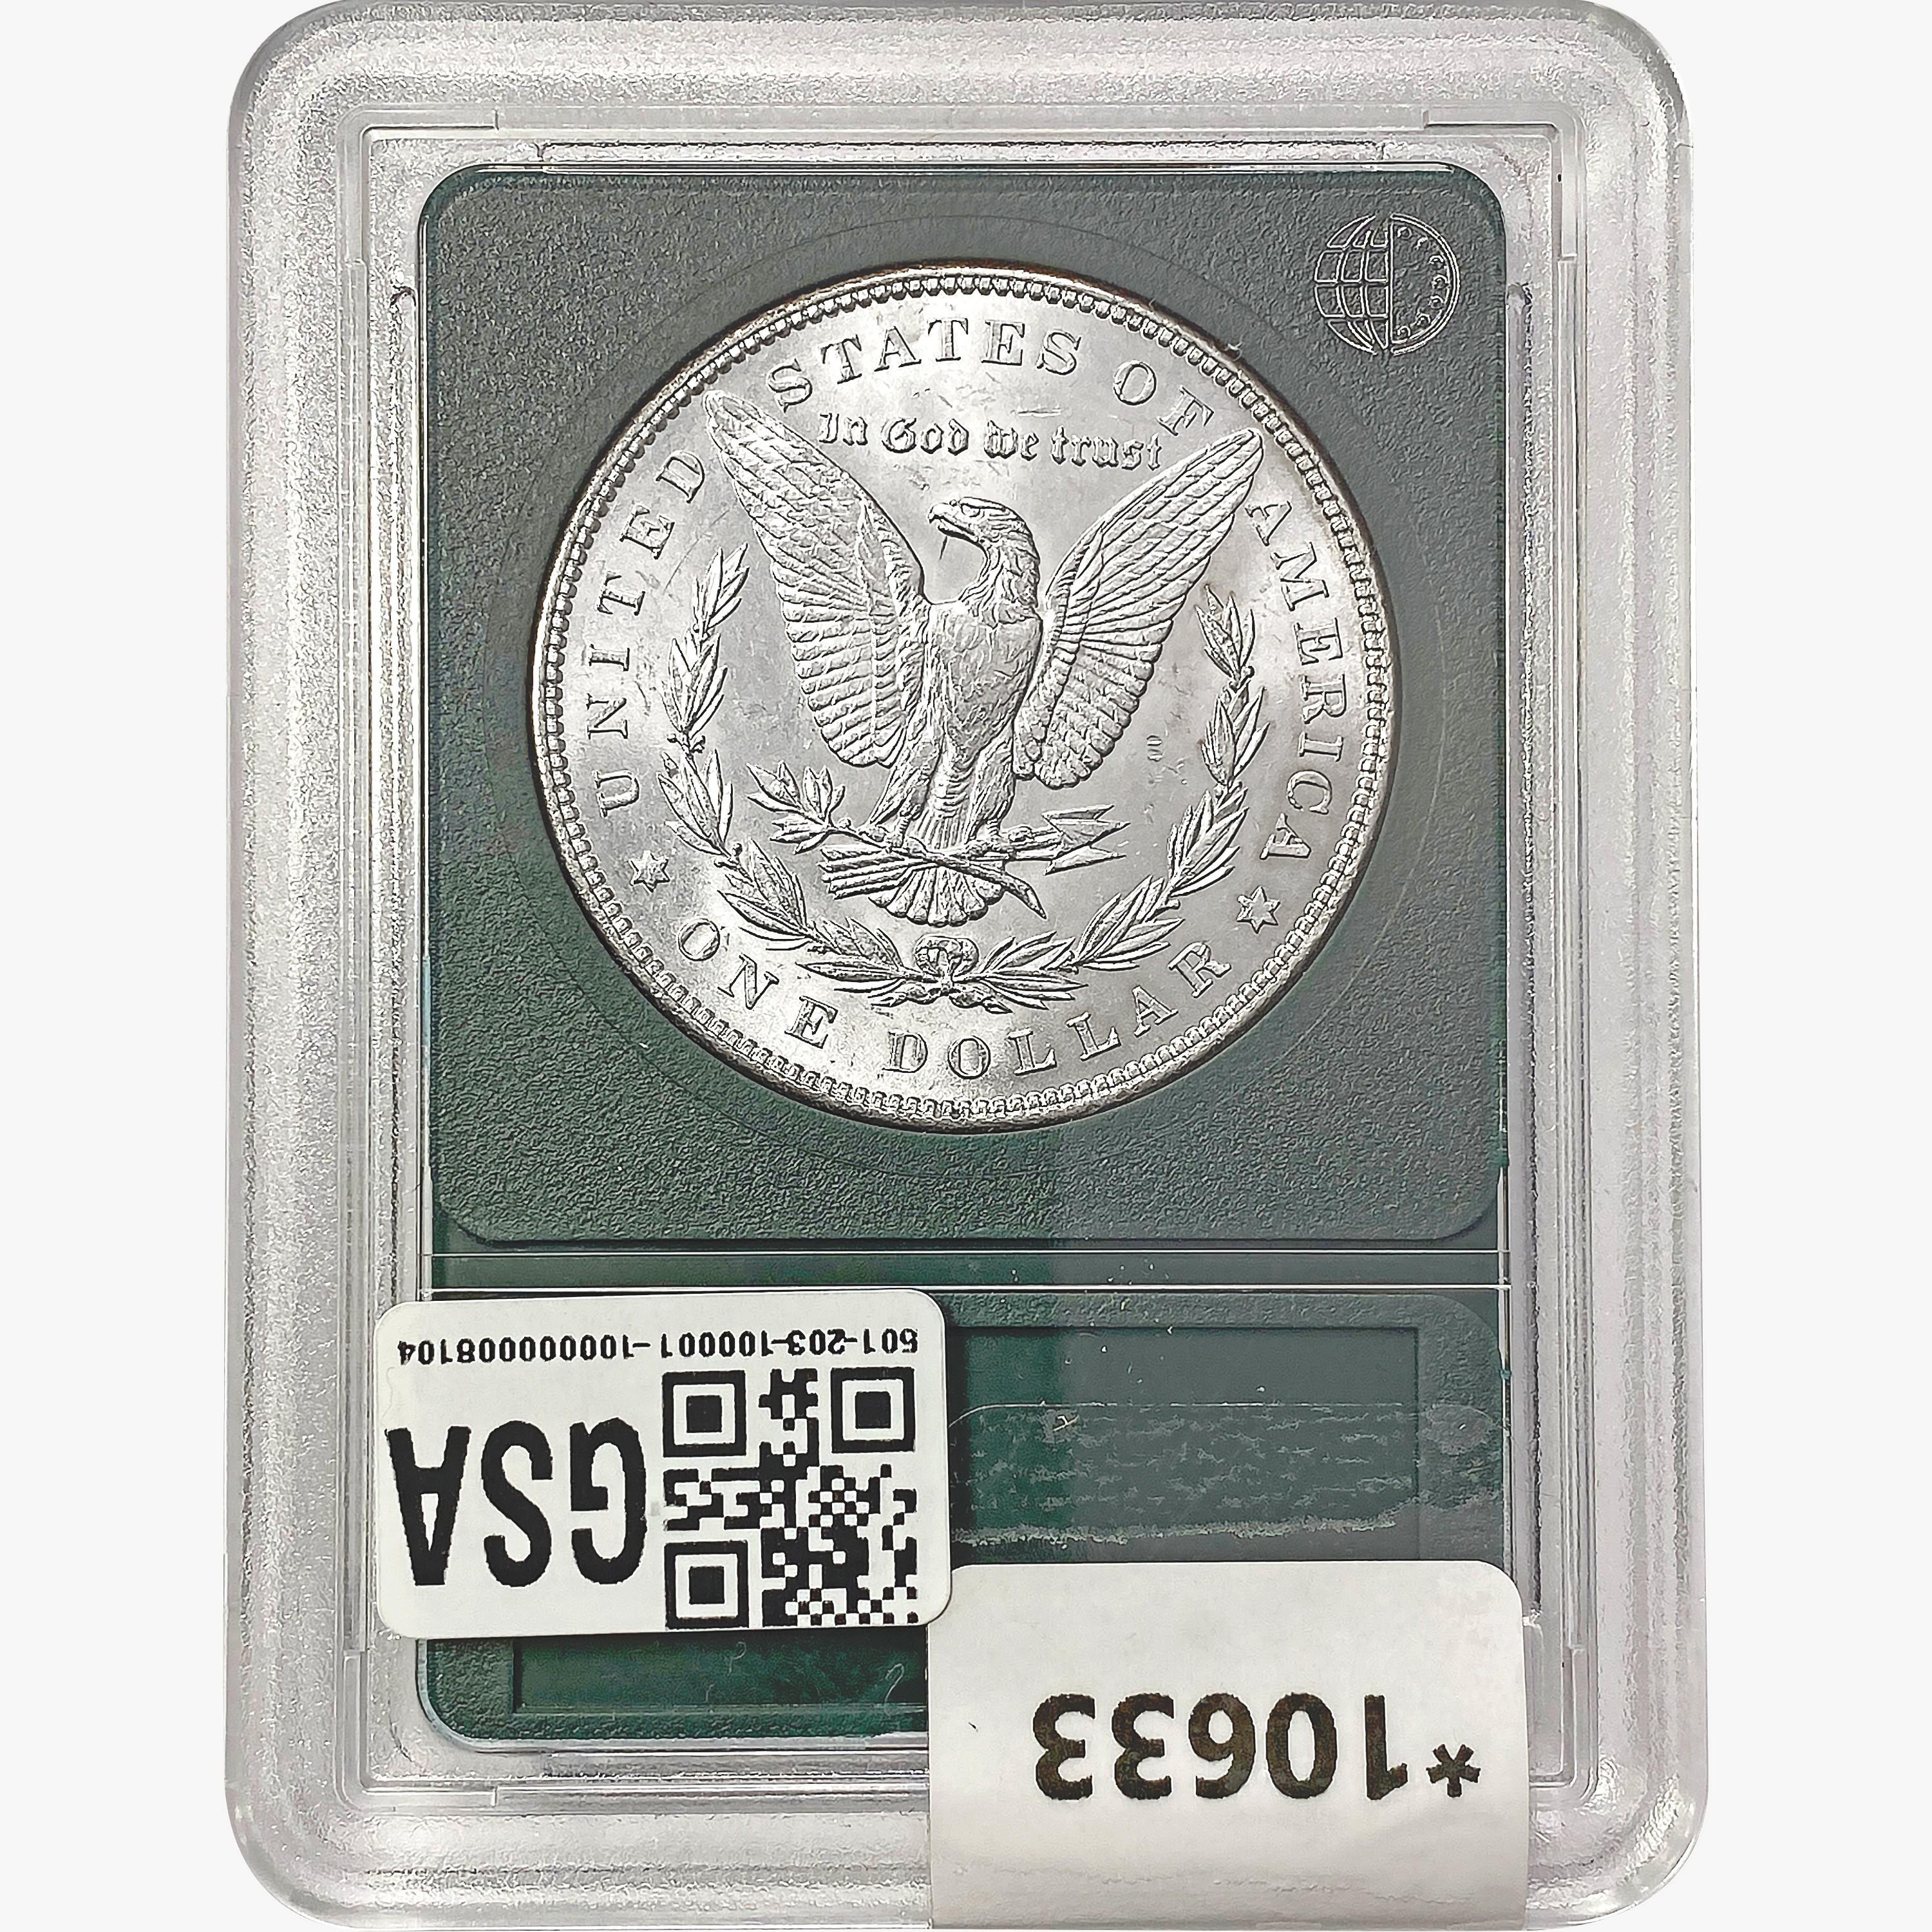 1899 Morgan Silver Dollar GG MS67